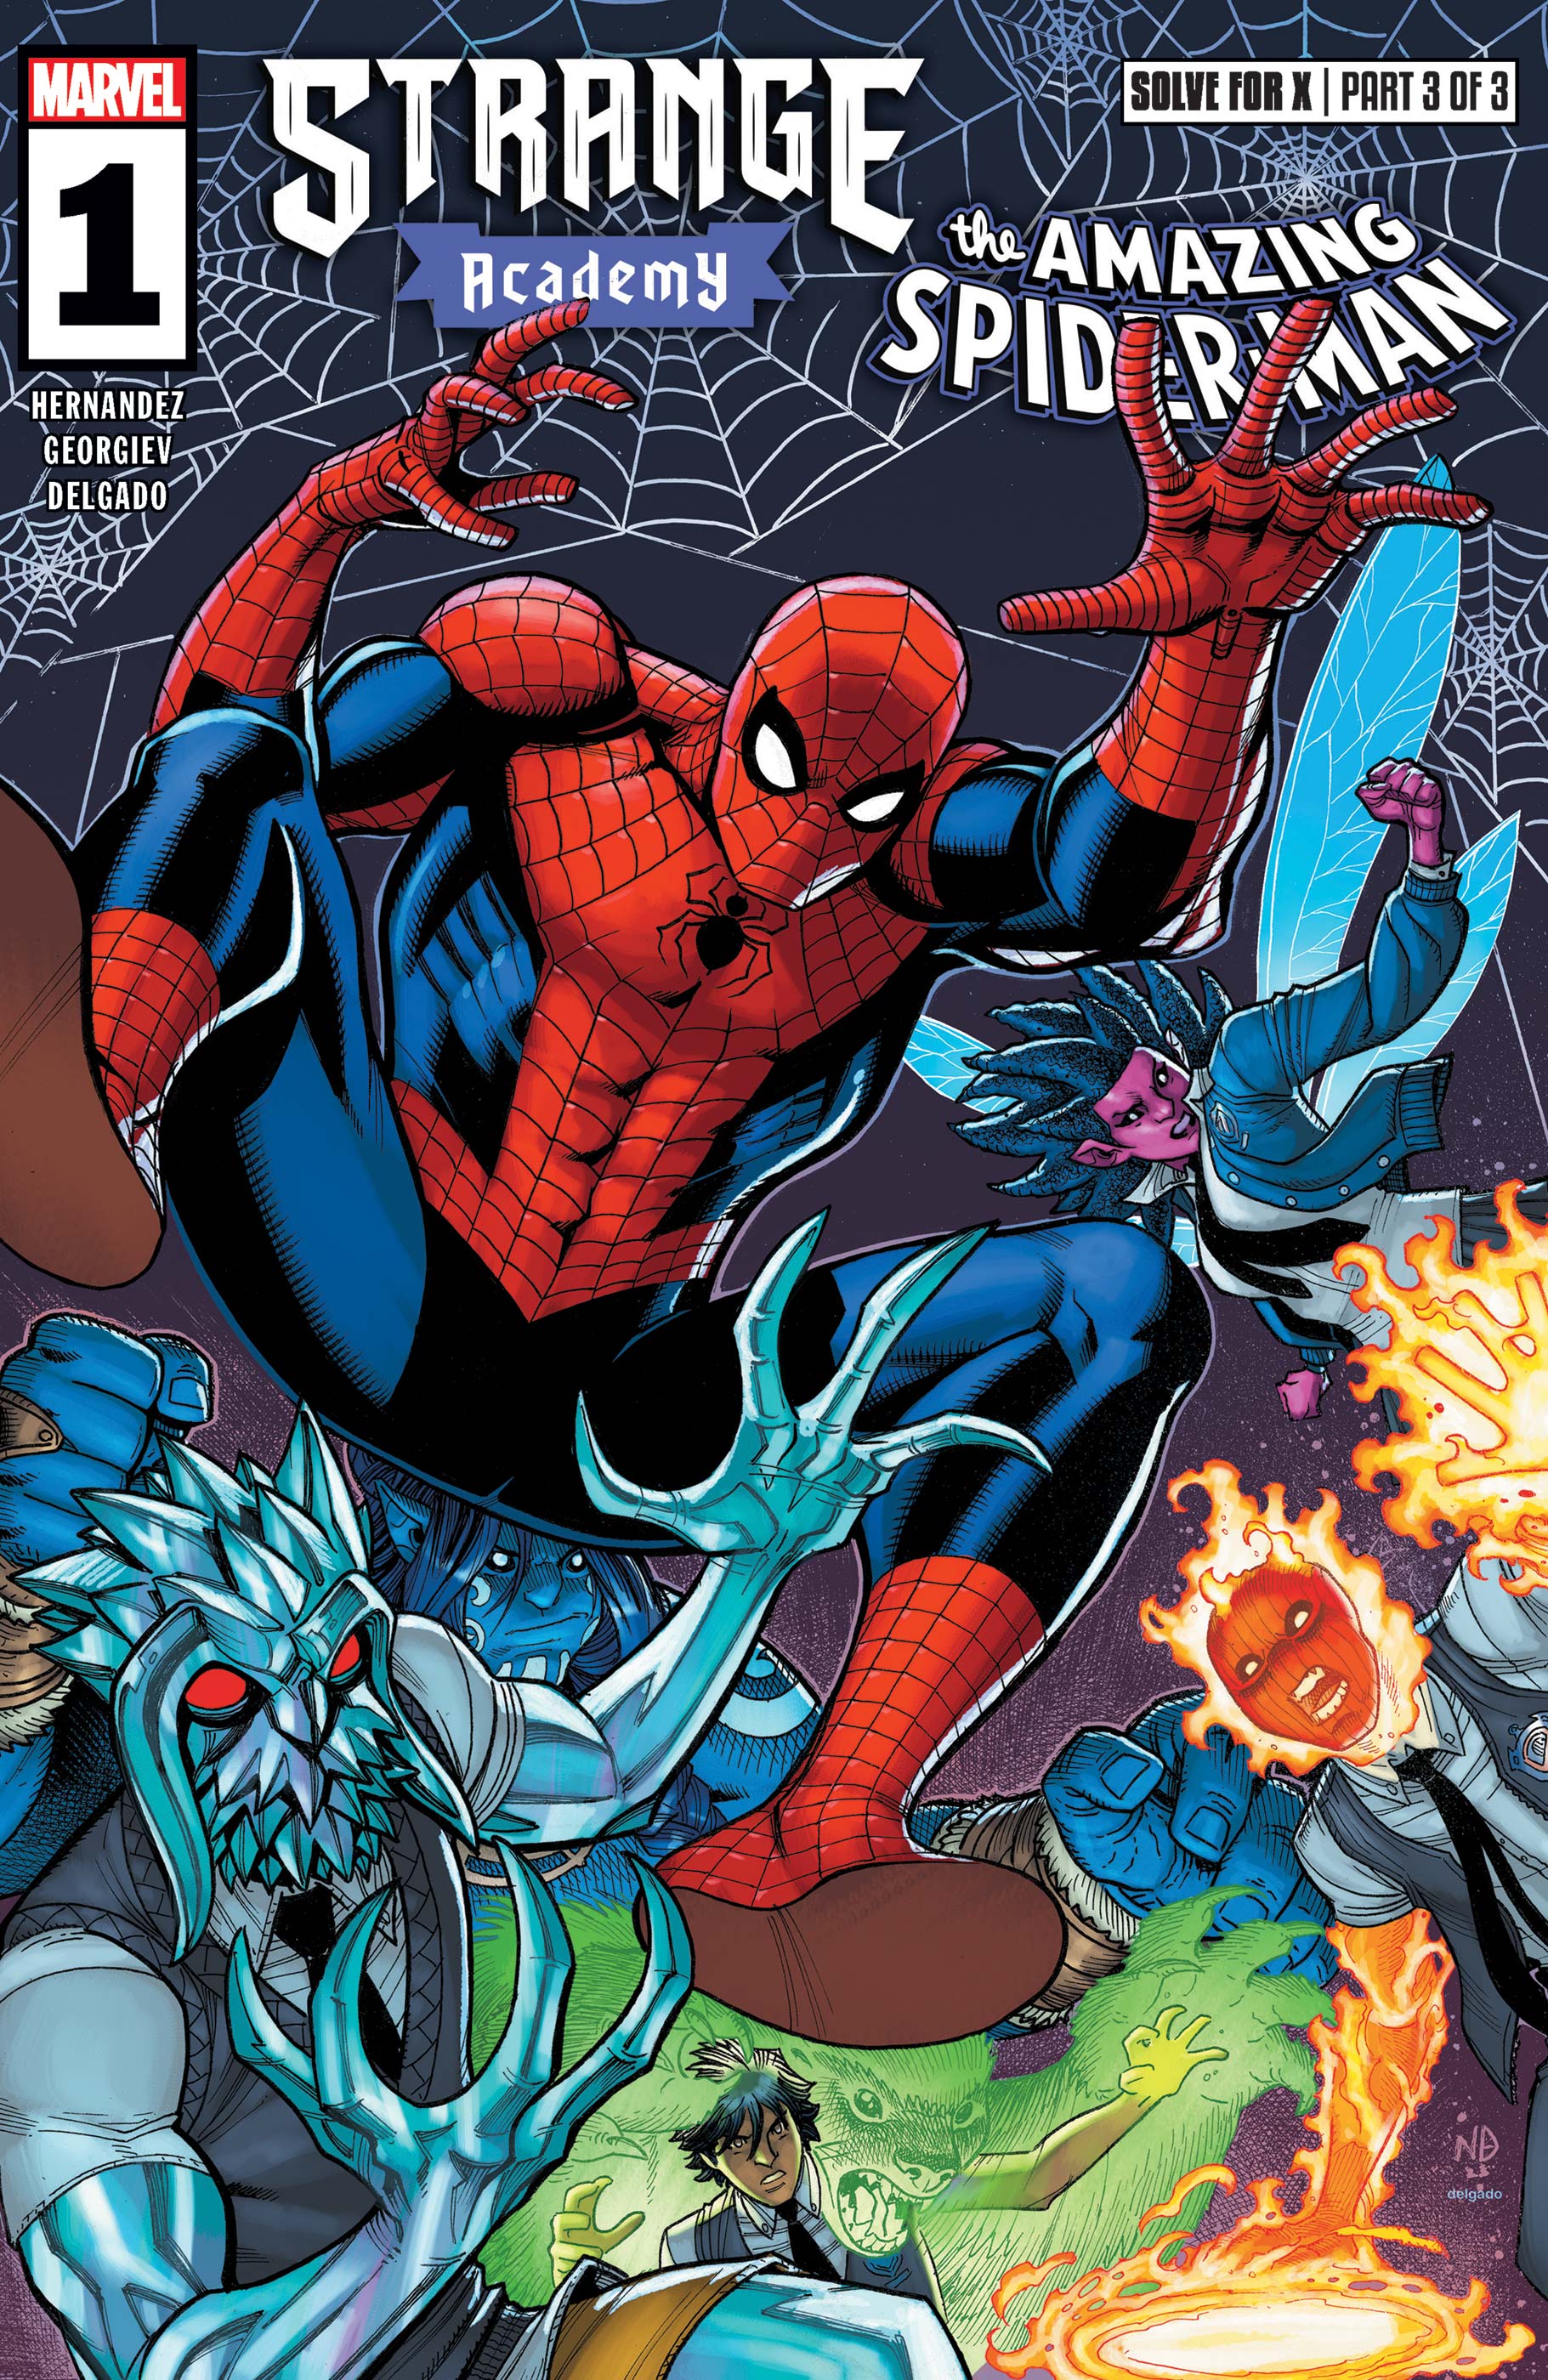 Strange Academy: Amazing Spider-Man (2023) #1